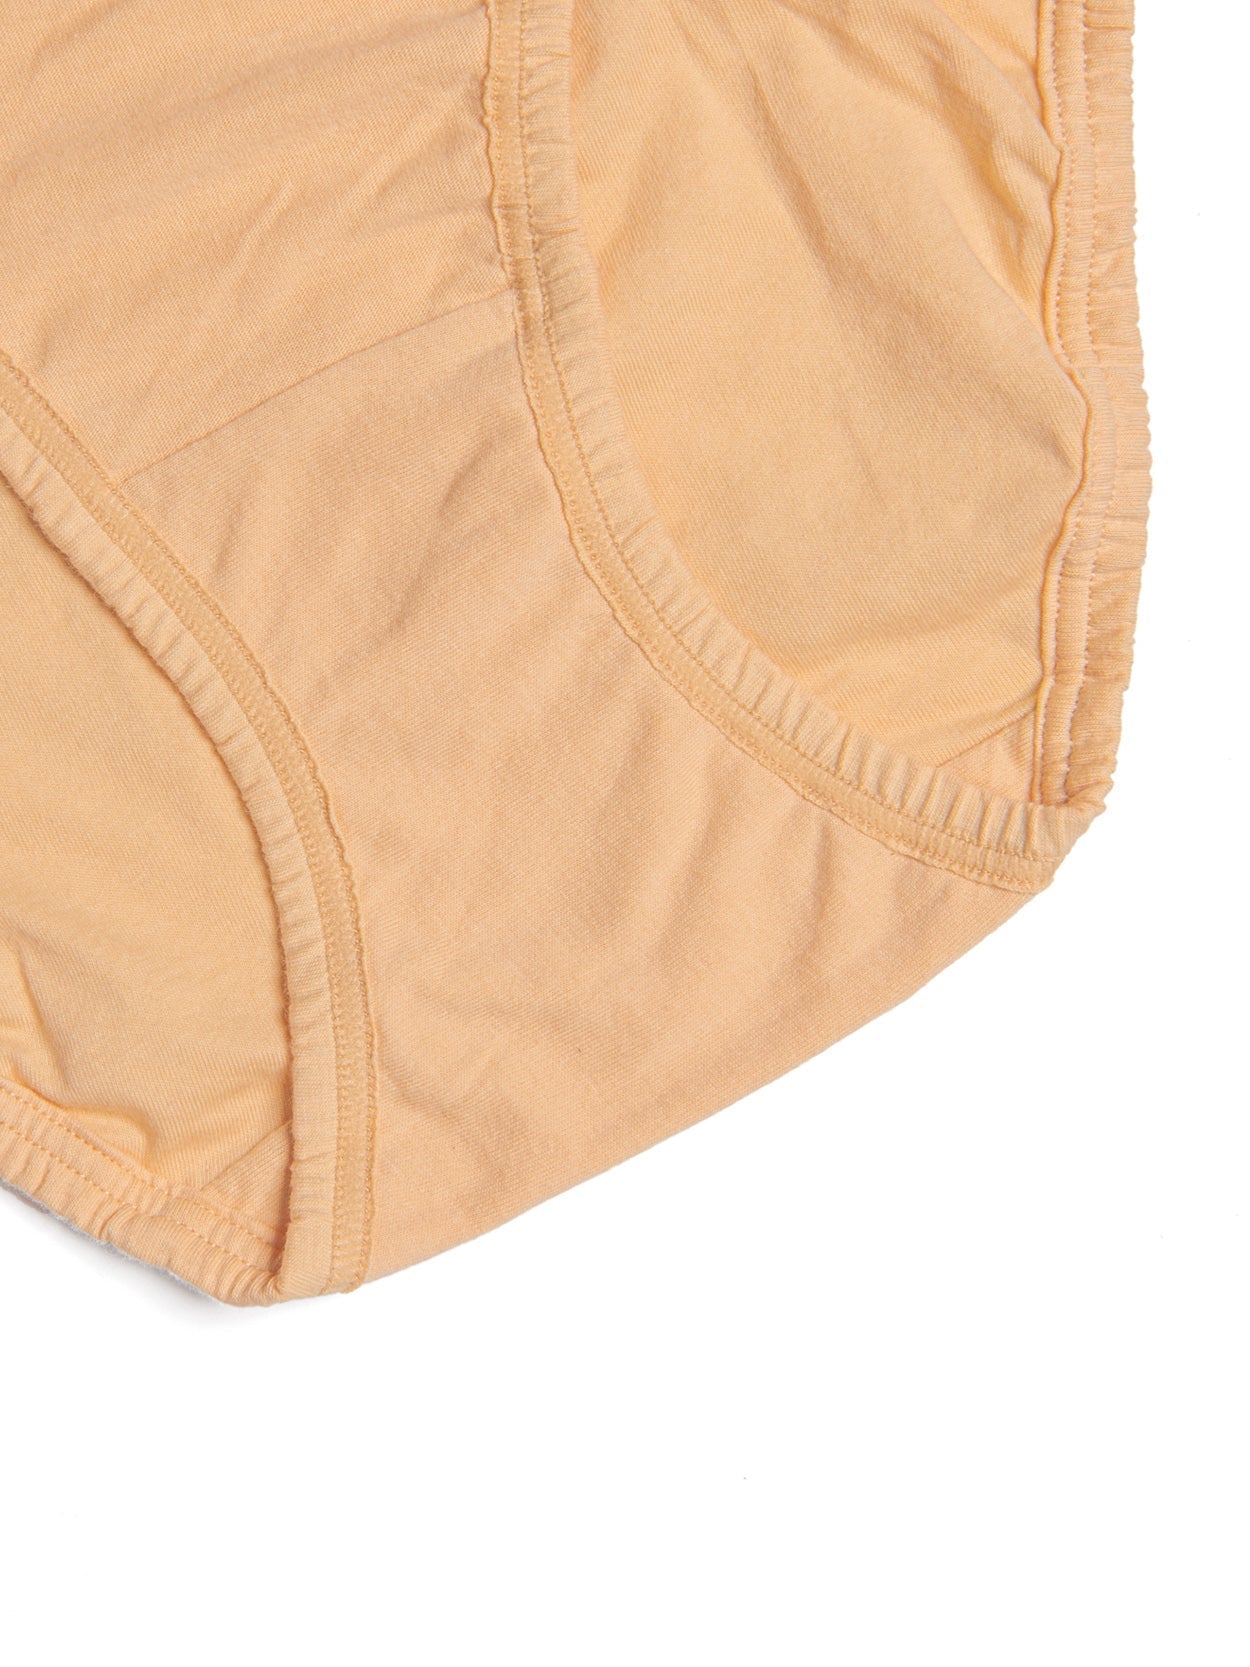 Comfort Soft Cotton Plus Size Underwear High-Cut Brief Panty 3 Pack Black –  WingsLove